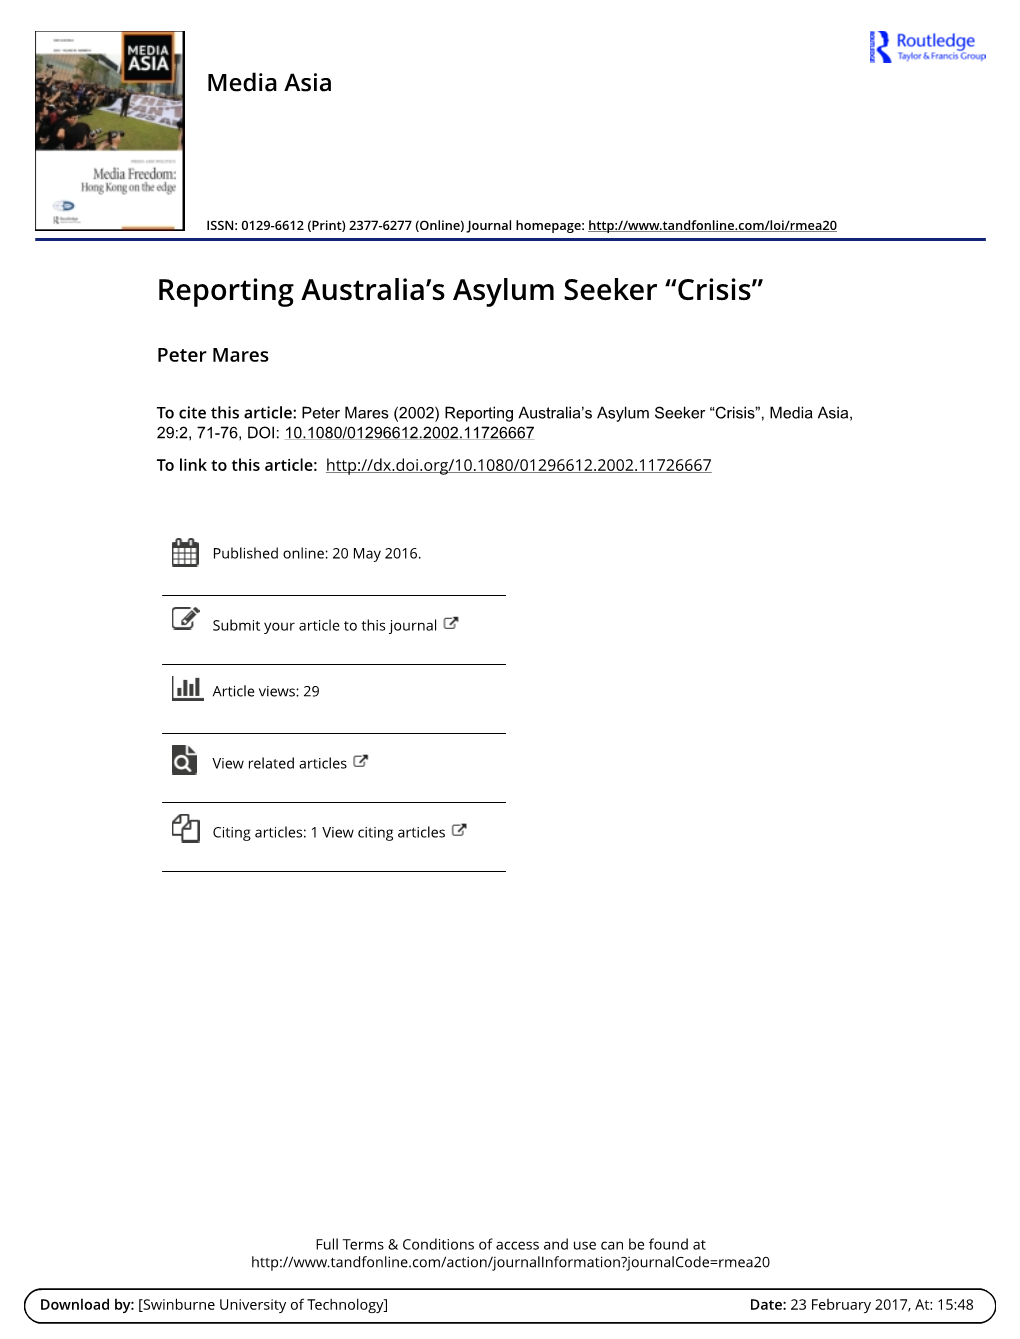 Reporting Australia's Asylum Seeker "Crisis